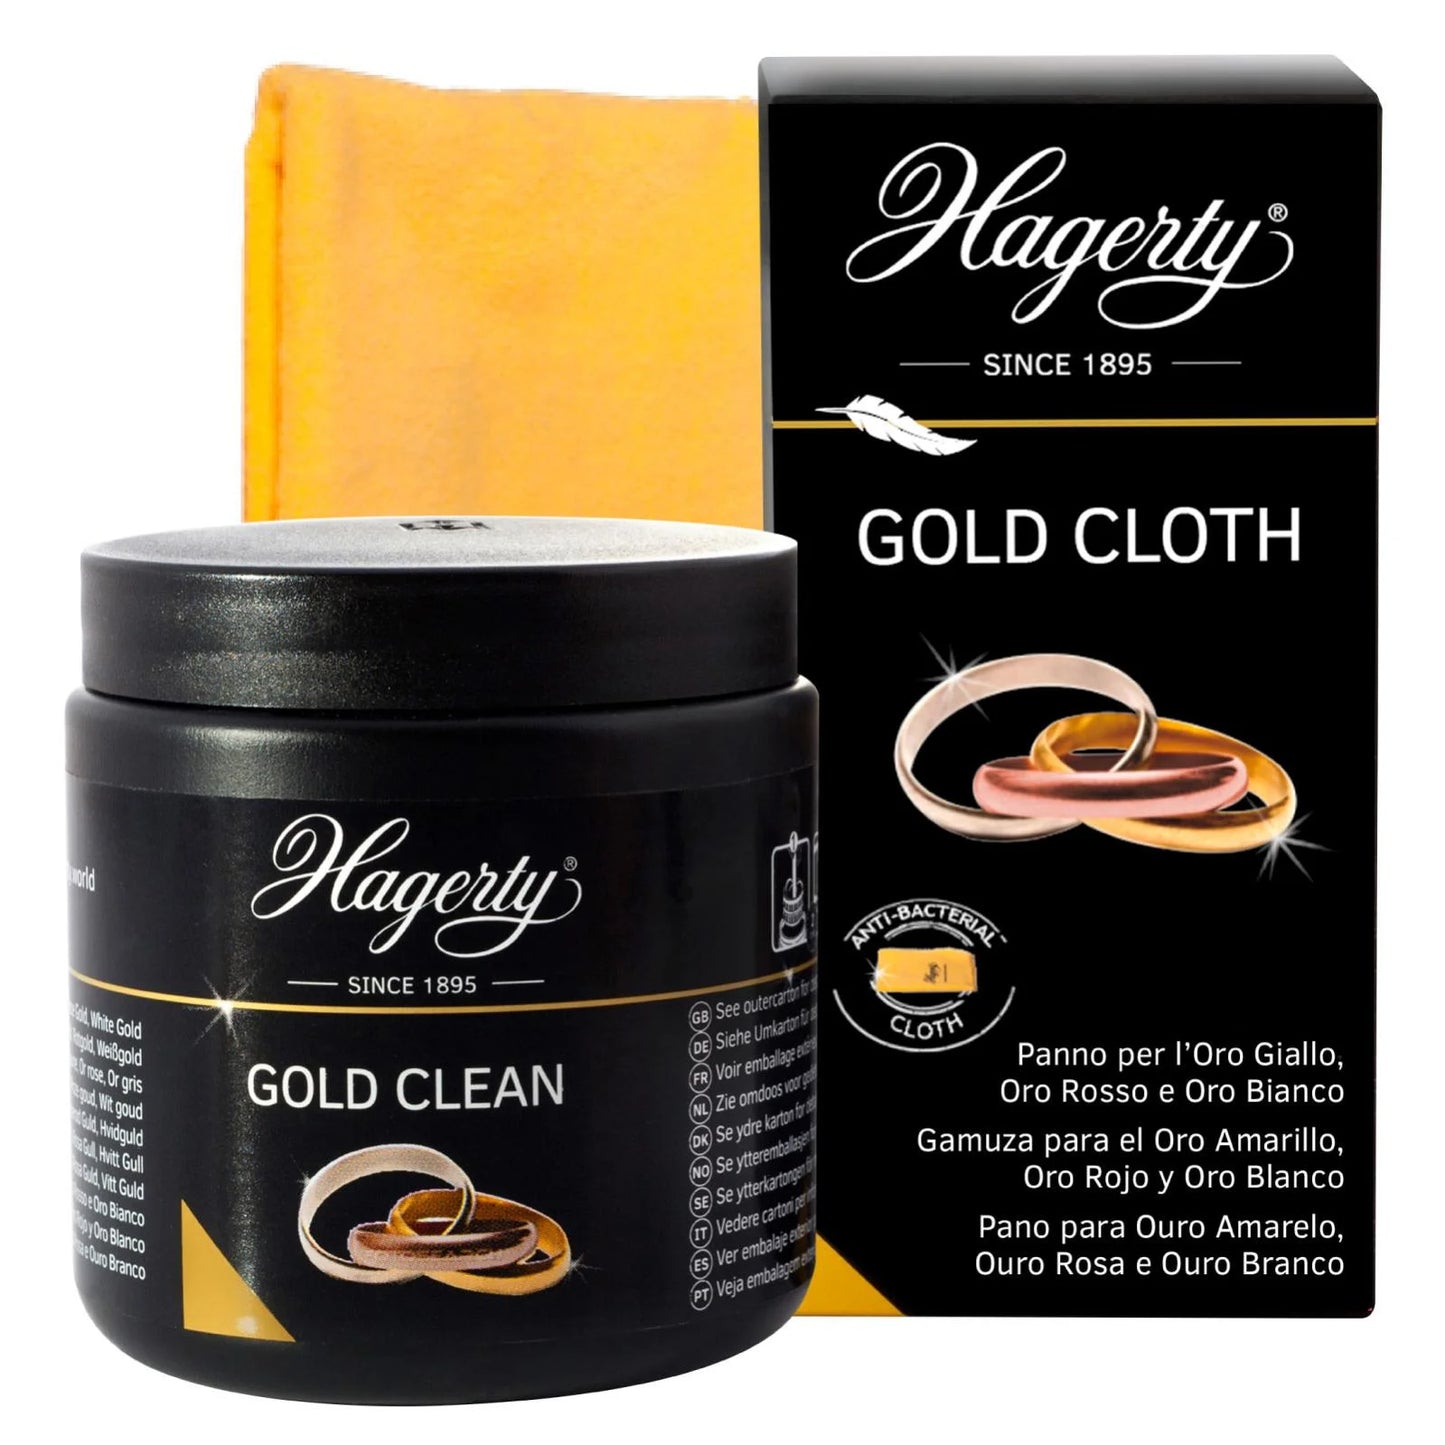 Hagerty Gold Clean & Gold Cloth cura gioielli in oro